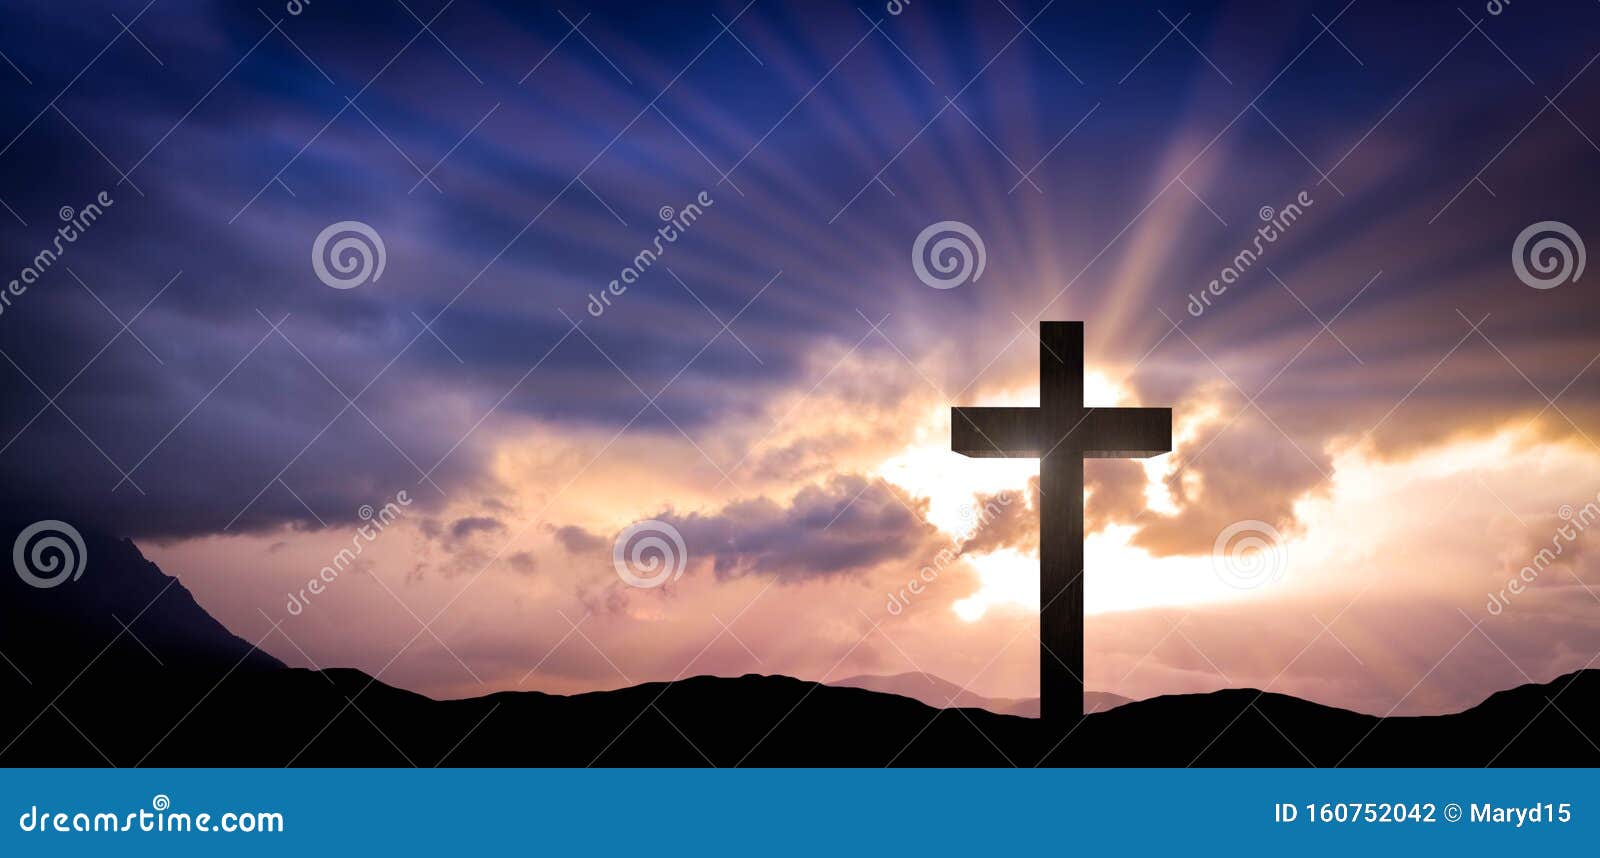 cross at sunset. christian background